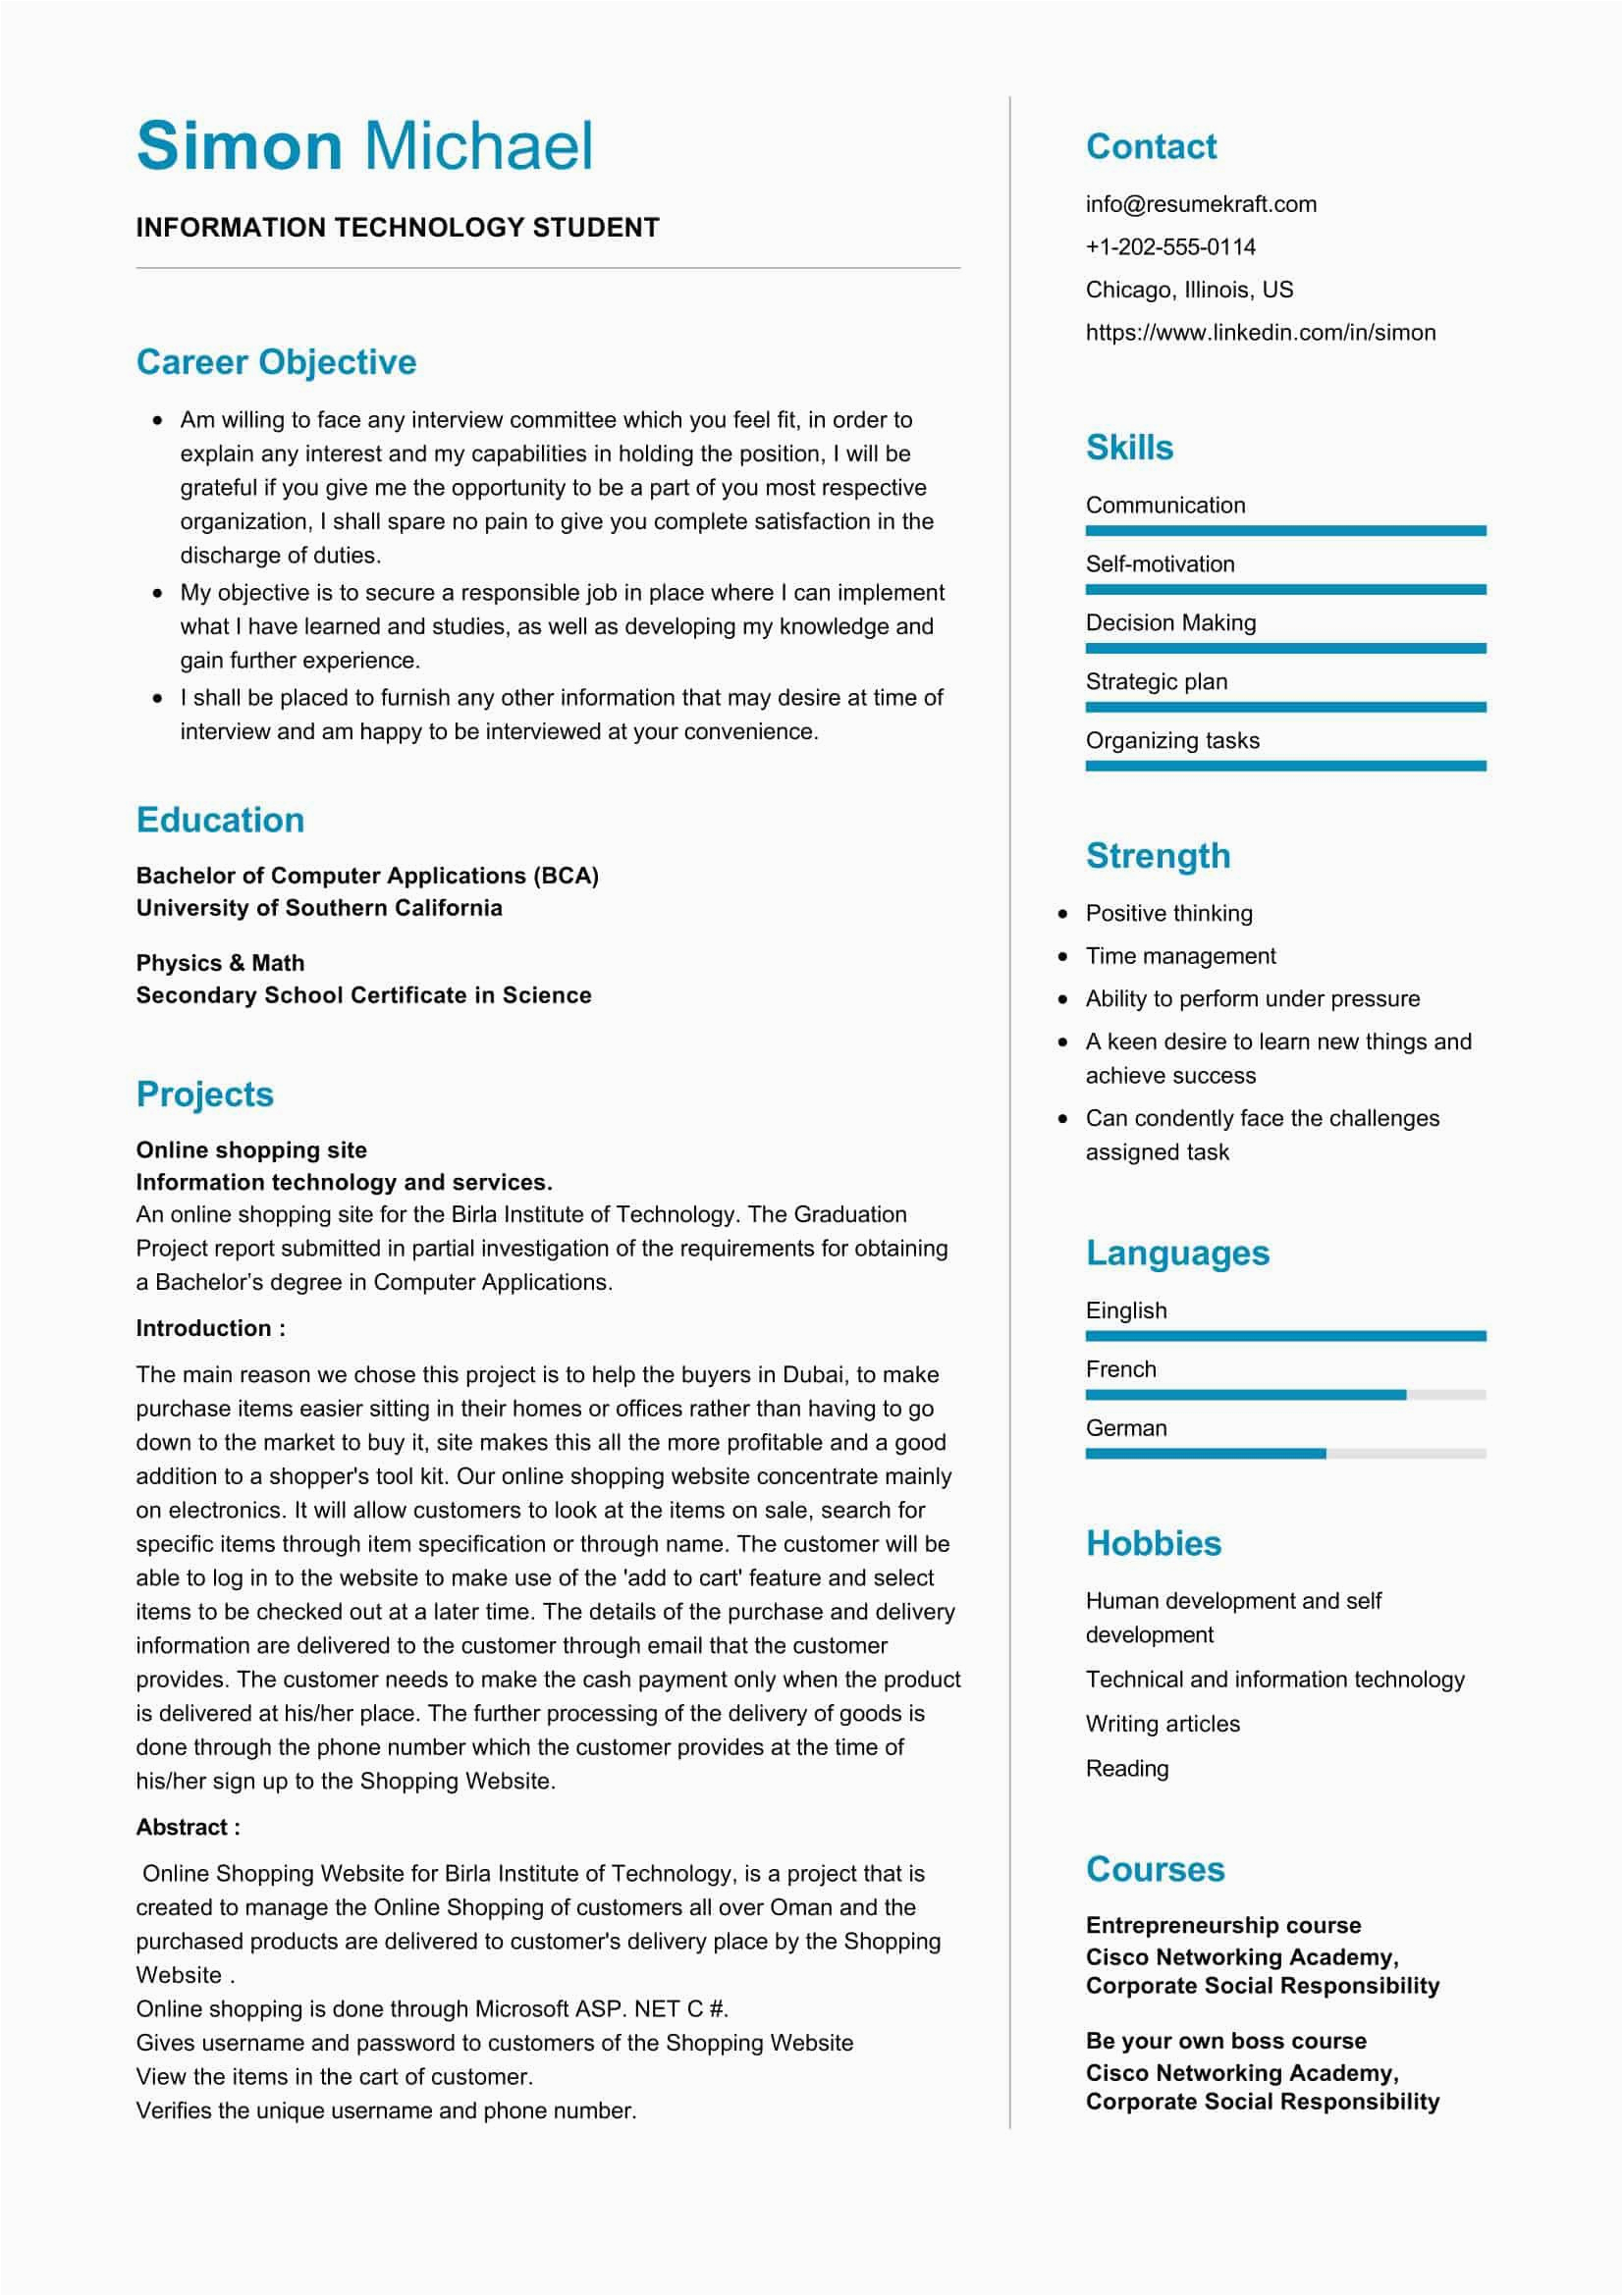 Sample Resume Objective for Information Technology Information Technology Student Resume Resumekraft